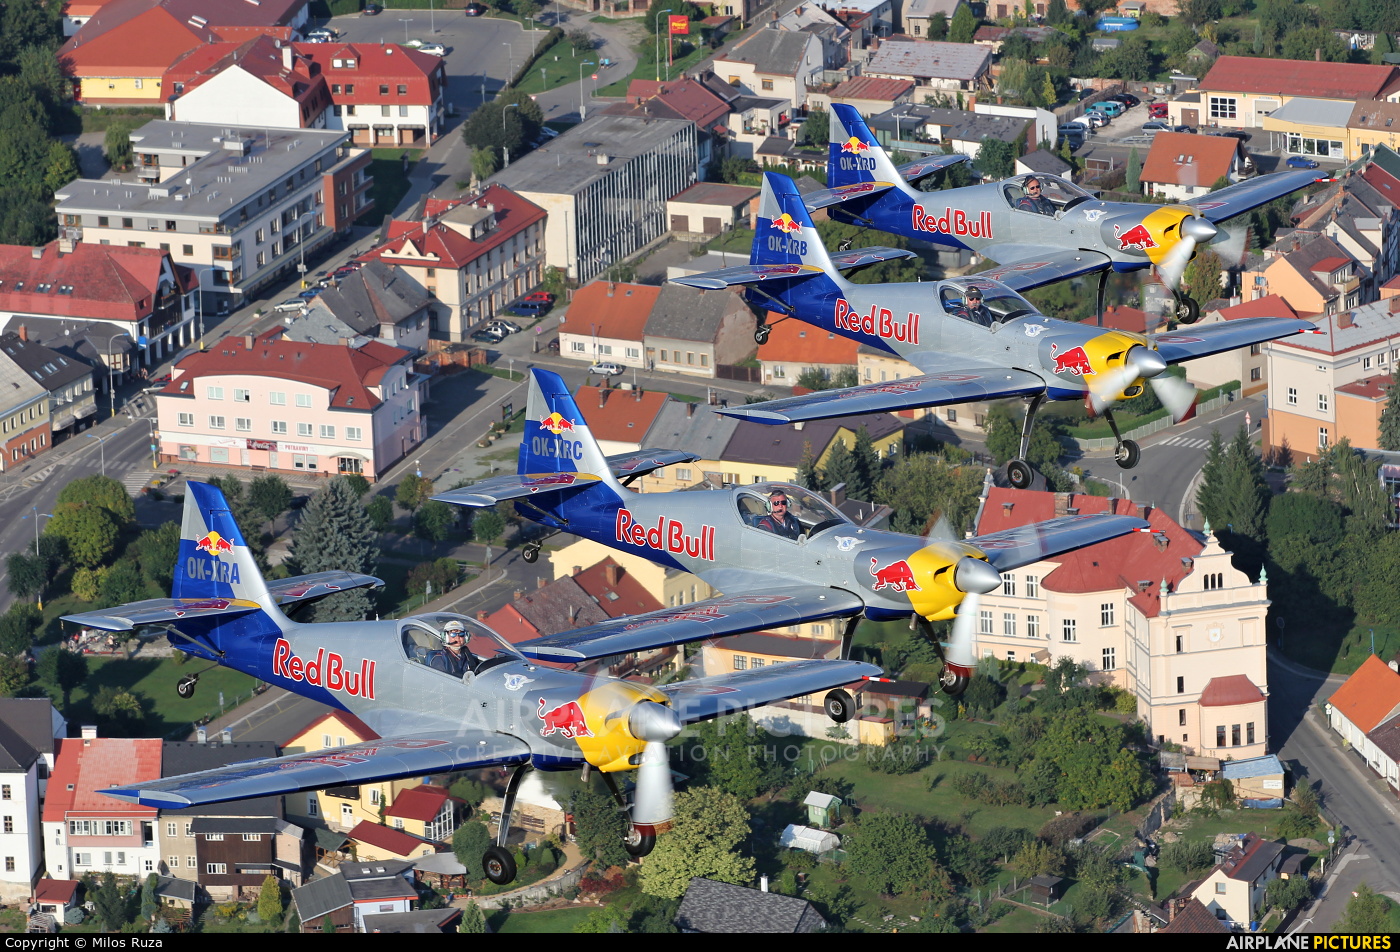 The Flying Bulls : Aerobatics Team OK-XRA aircraft at In Flight - Czech Republic